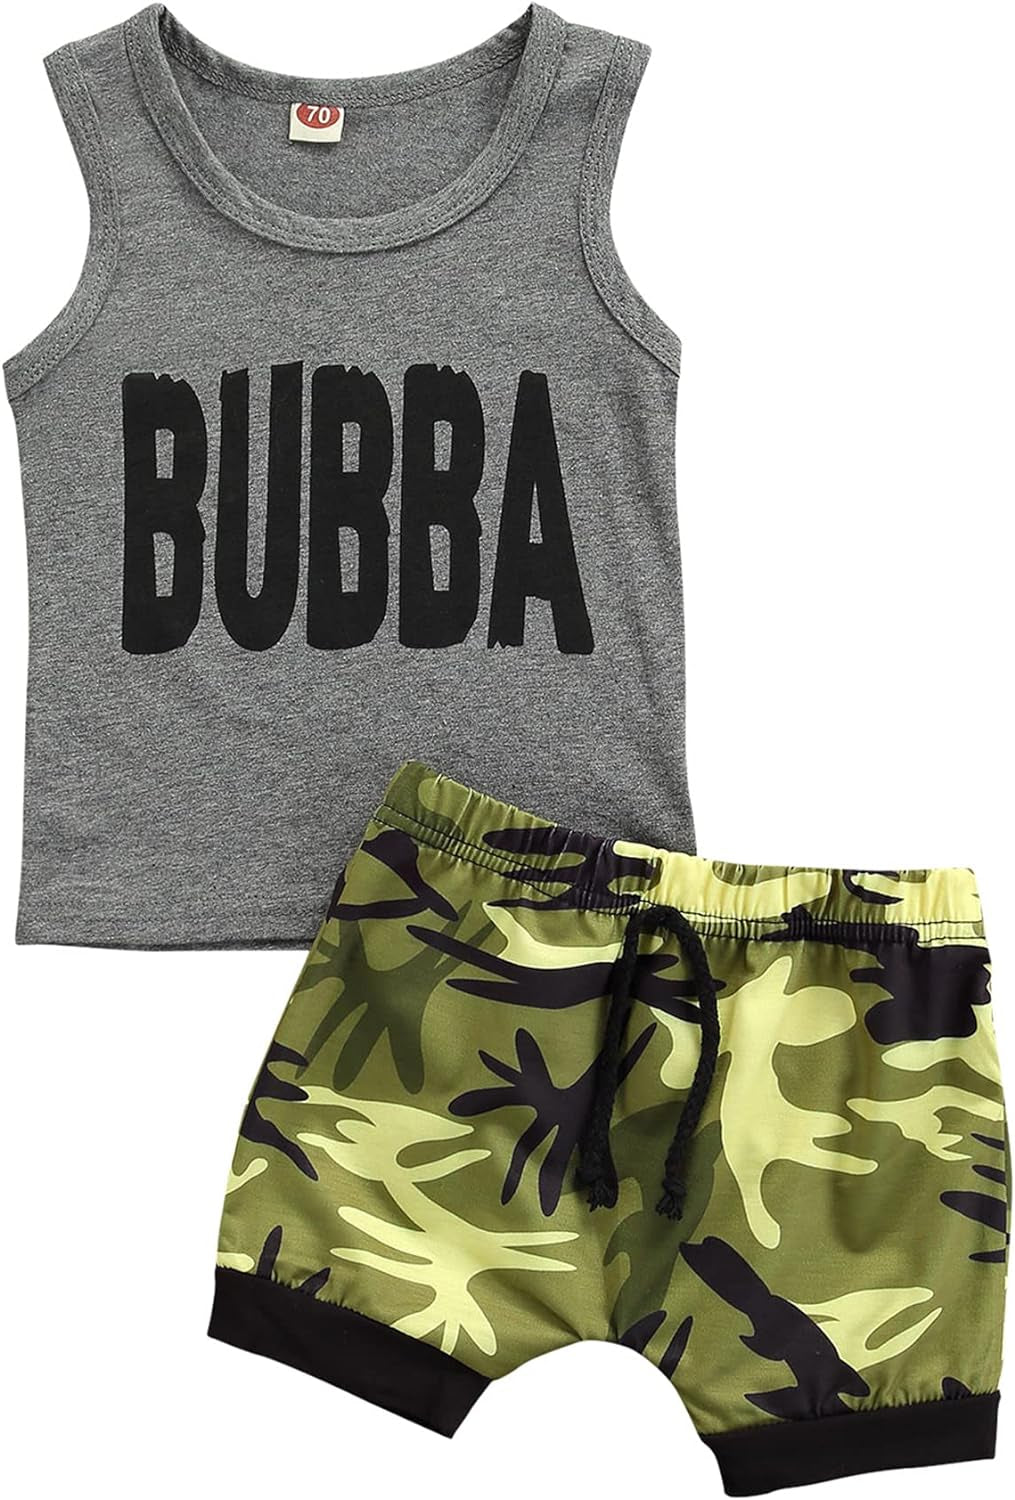 Summer Kids Baby Boy Shorts Clothes Set Letter Sleeveless Vest Tops Tree Printed Shorts Beachwear Suit